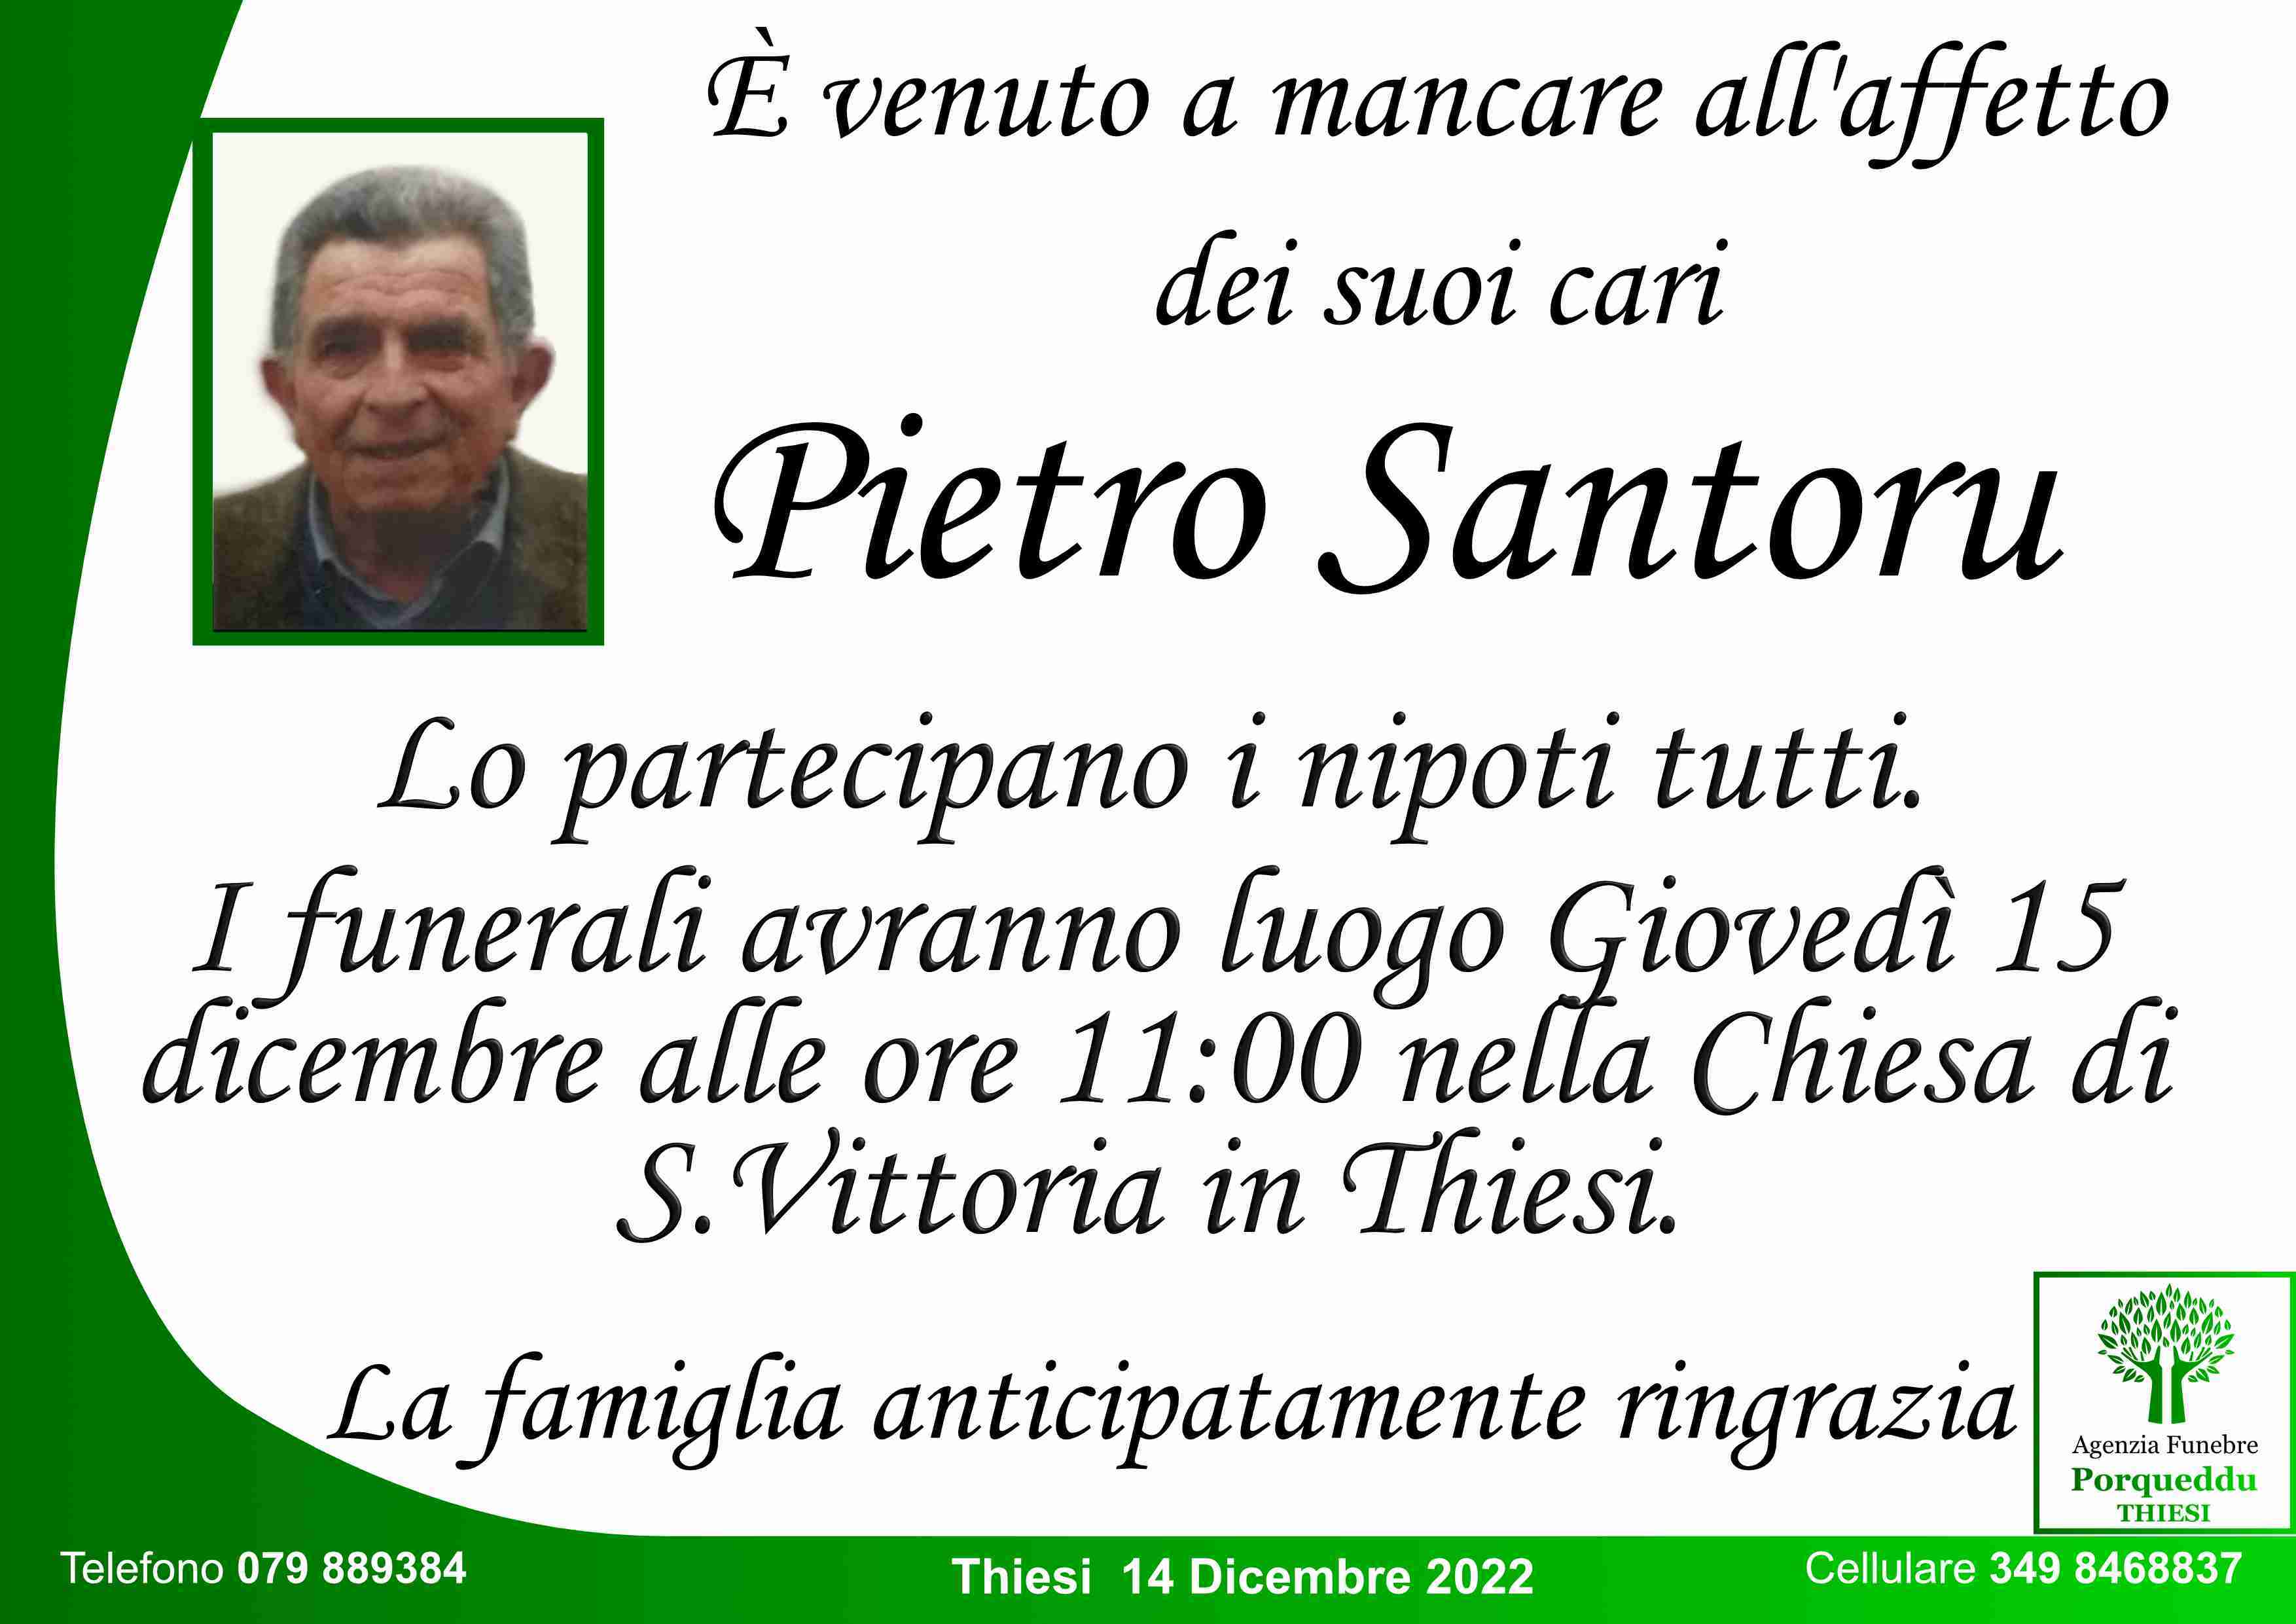 Pietro Santoru